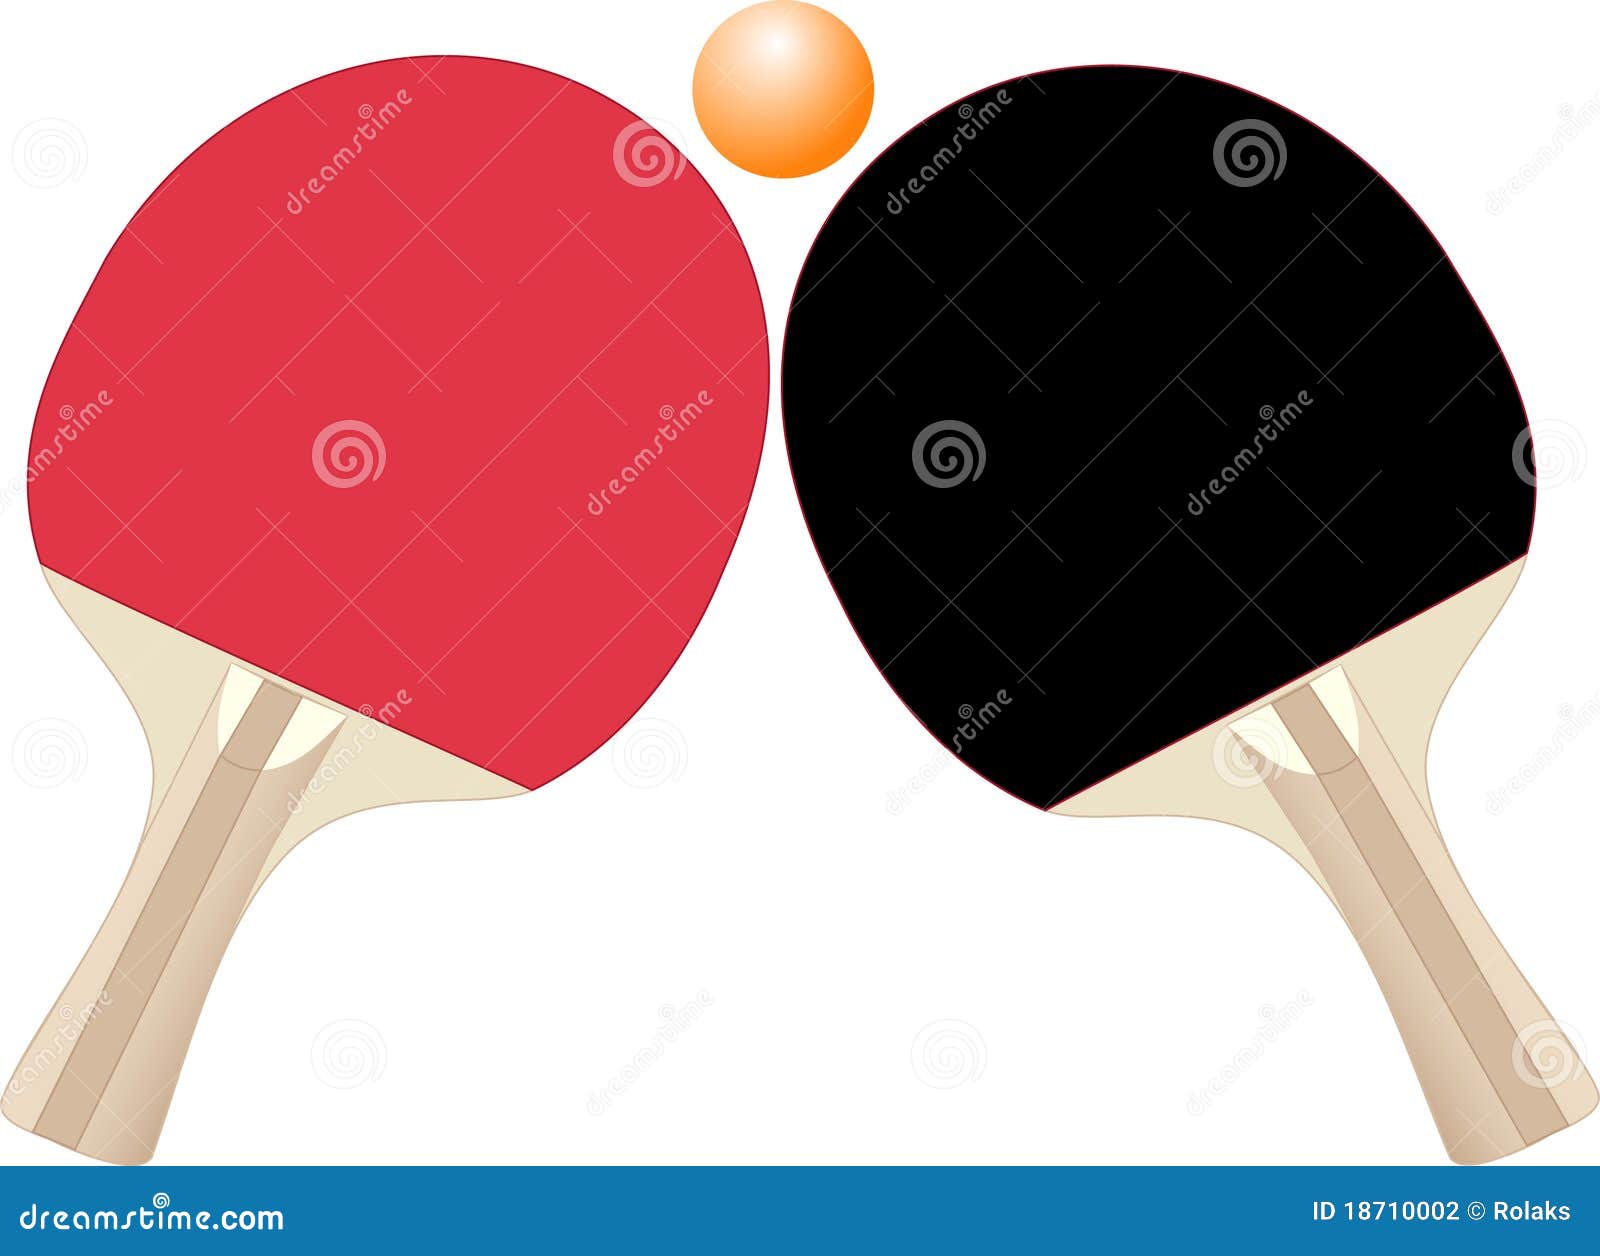 Table tennis rackets stock vector. Illustration of sport - 18710002